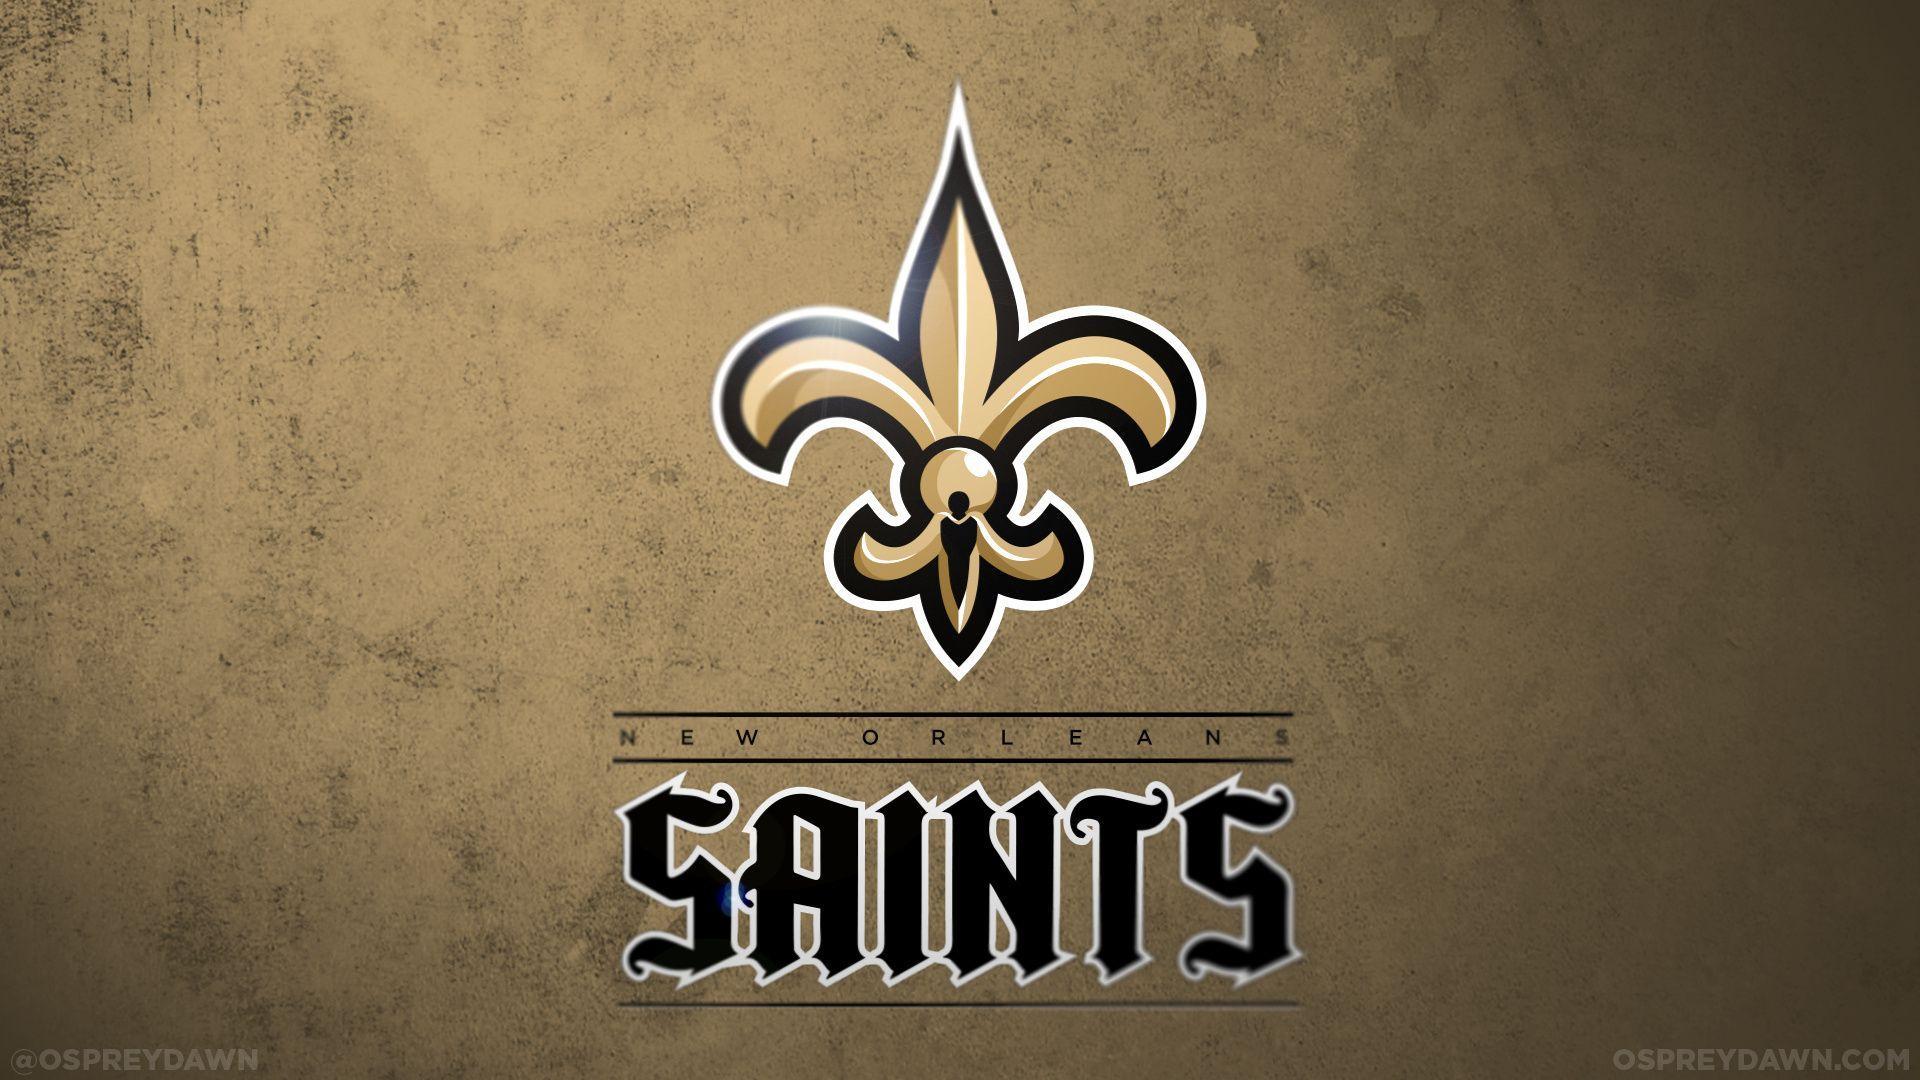 New Orleans Saints Nfl, Nfl, American Football, New